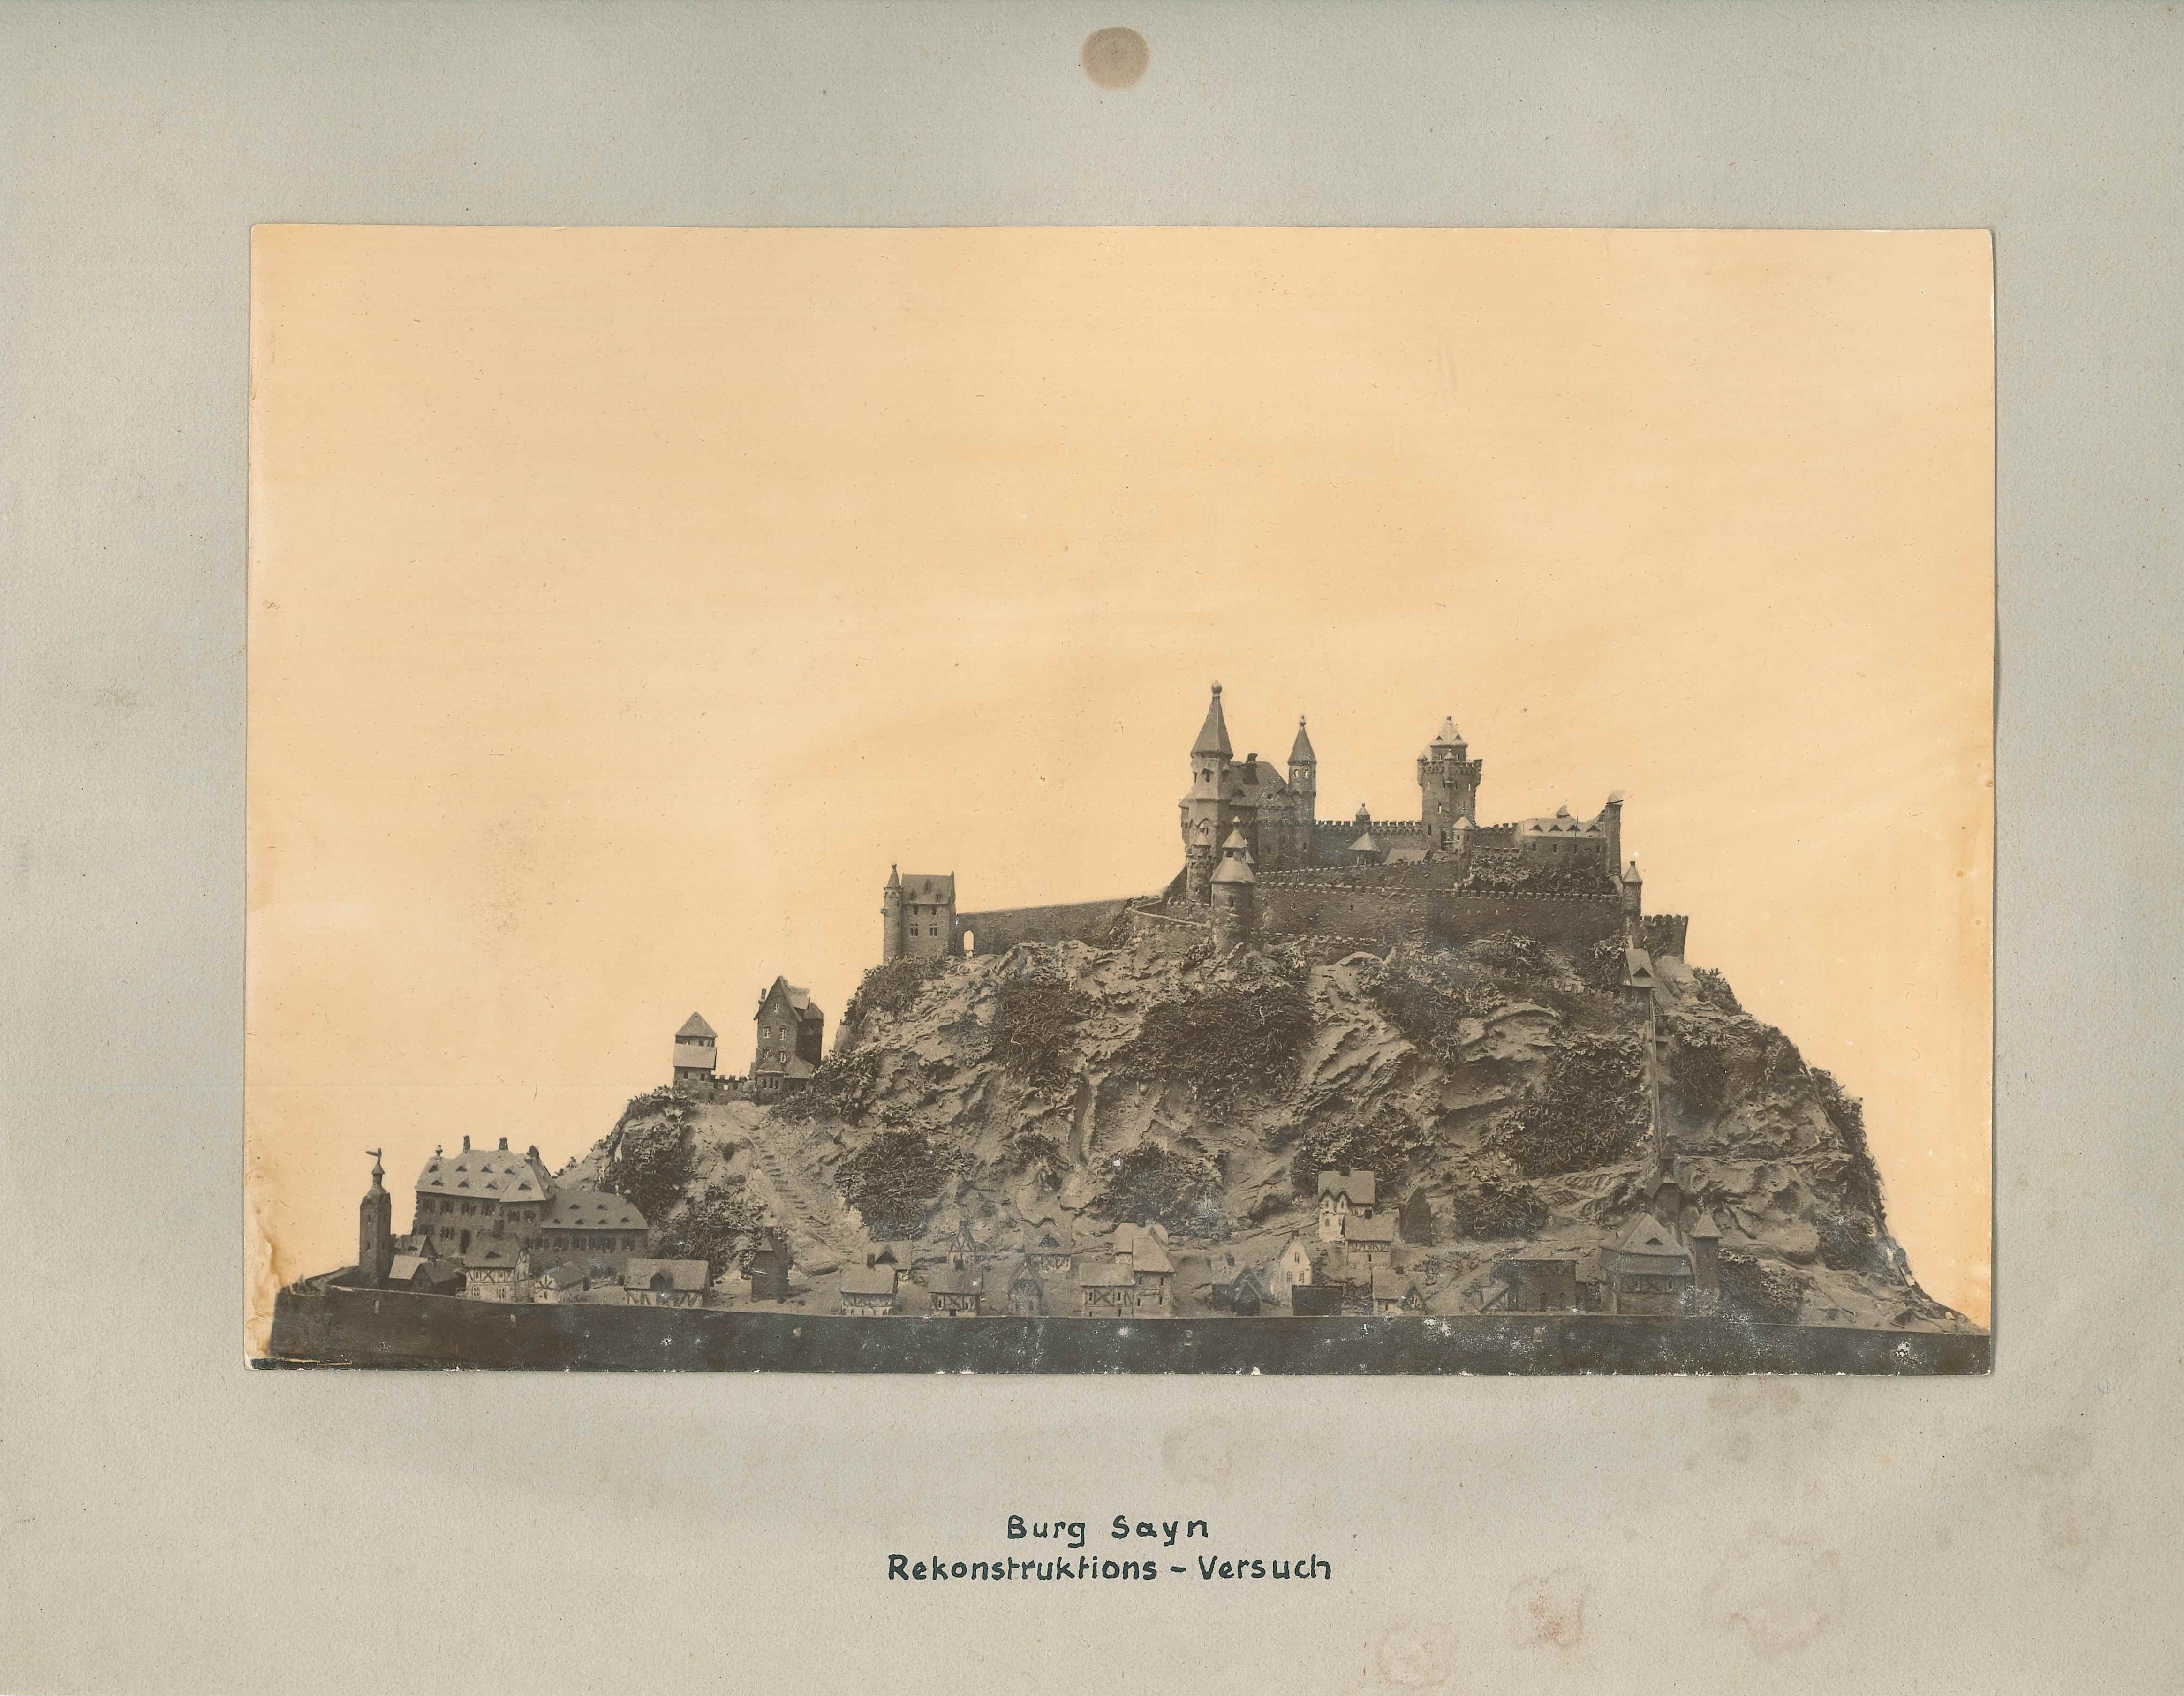 Burg Sayn, Rekonstruktion (REM CC BY-NC-SA)